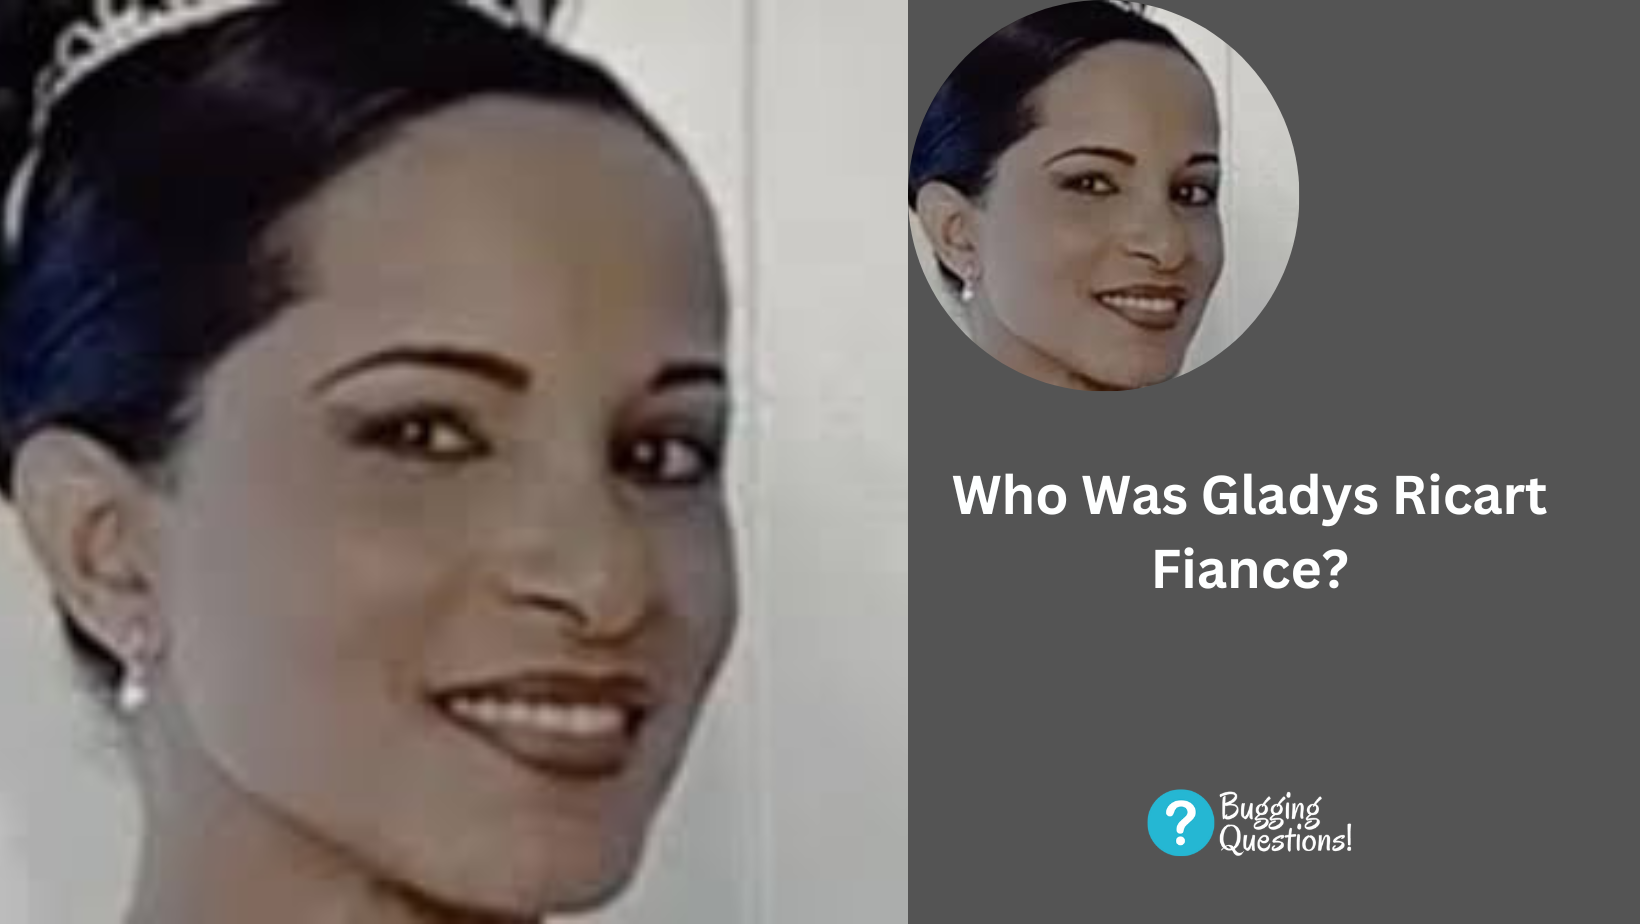 Who Was Gladys Ricart Fiance?